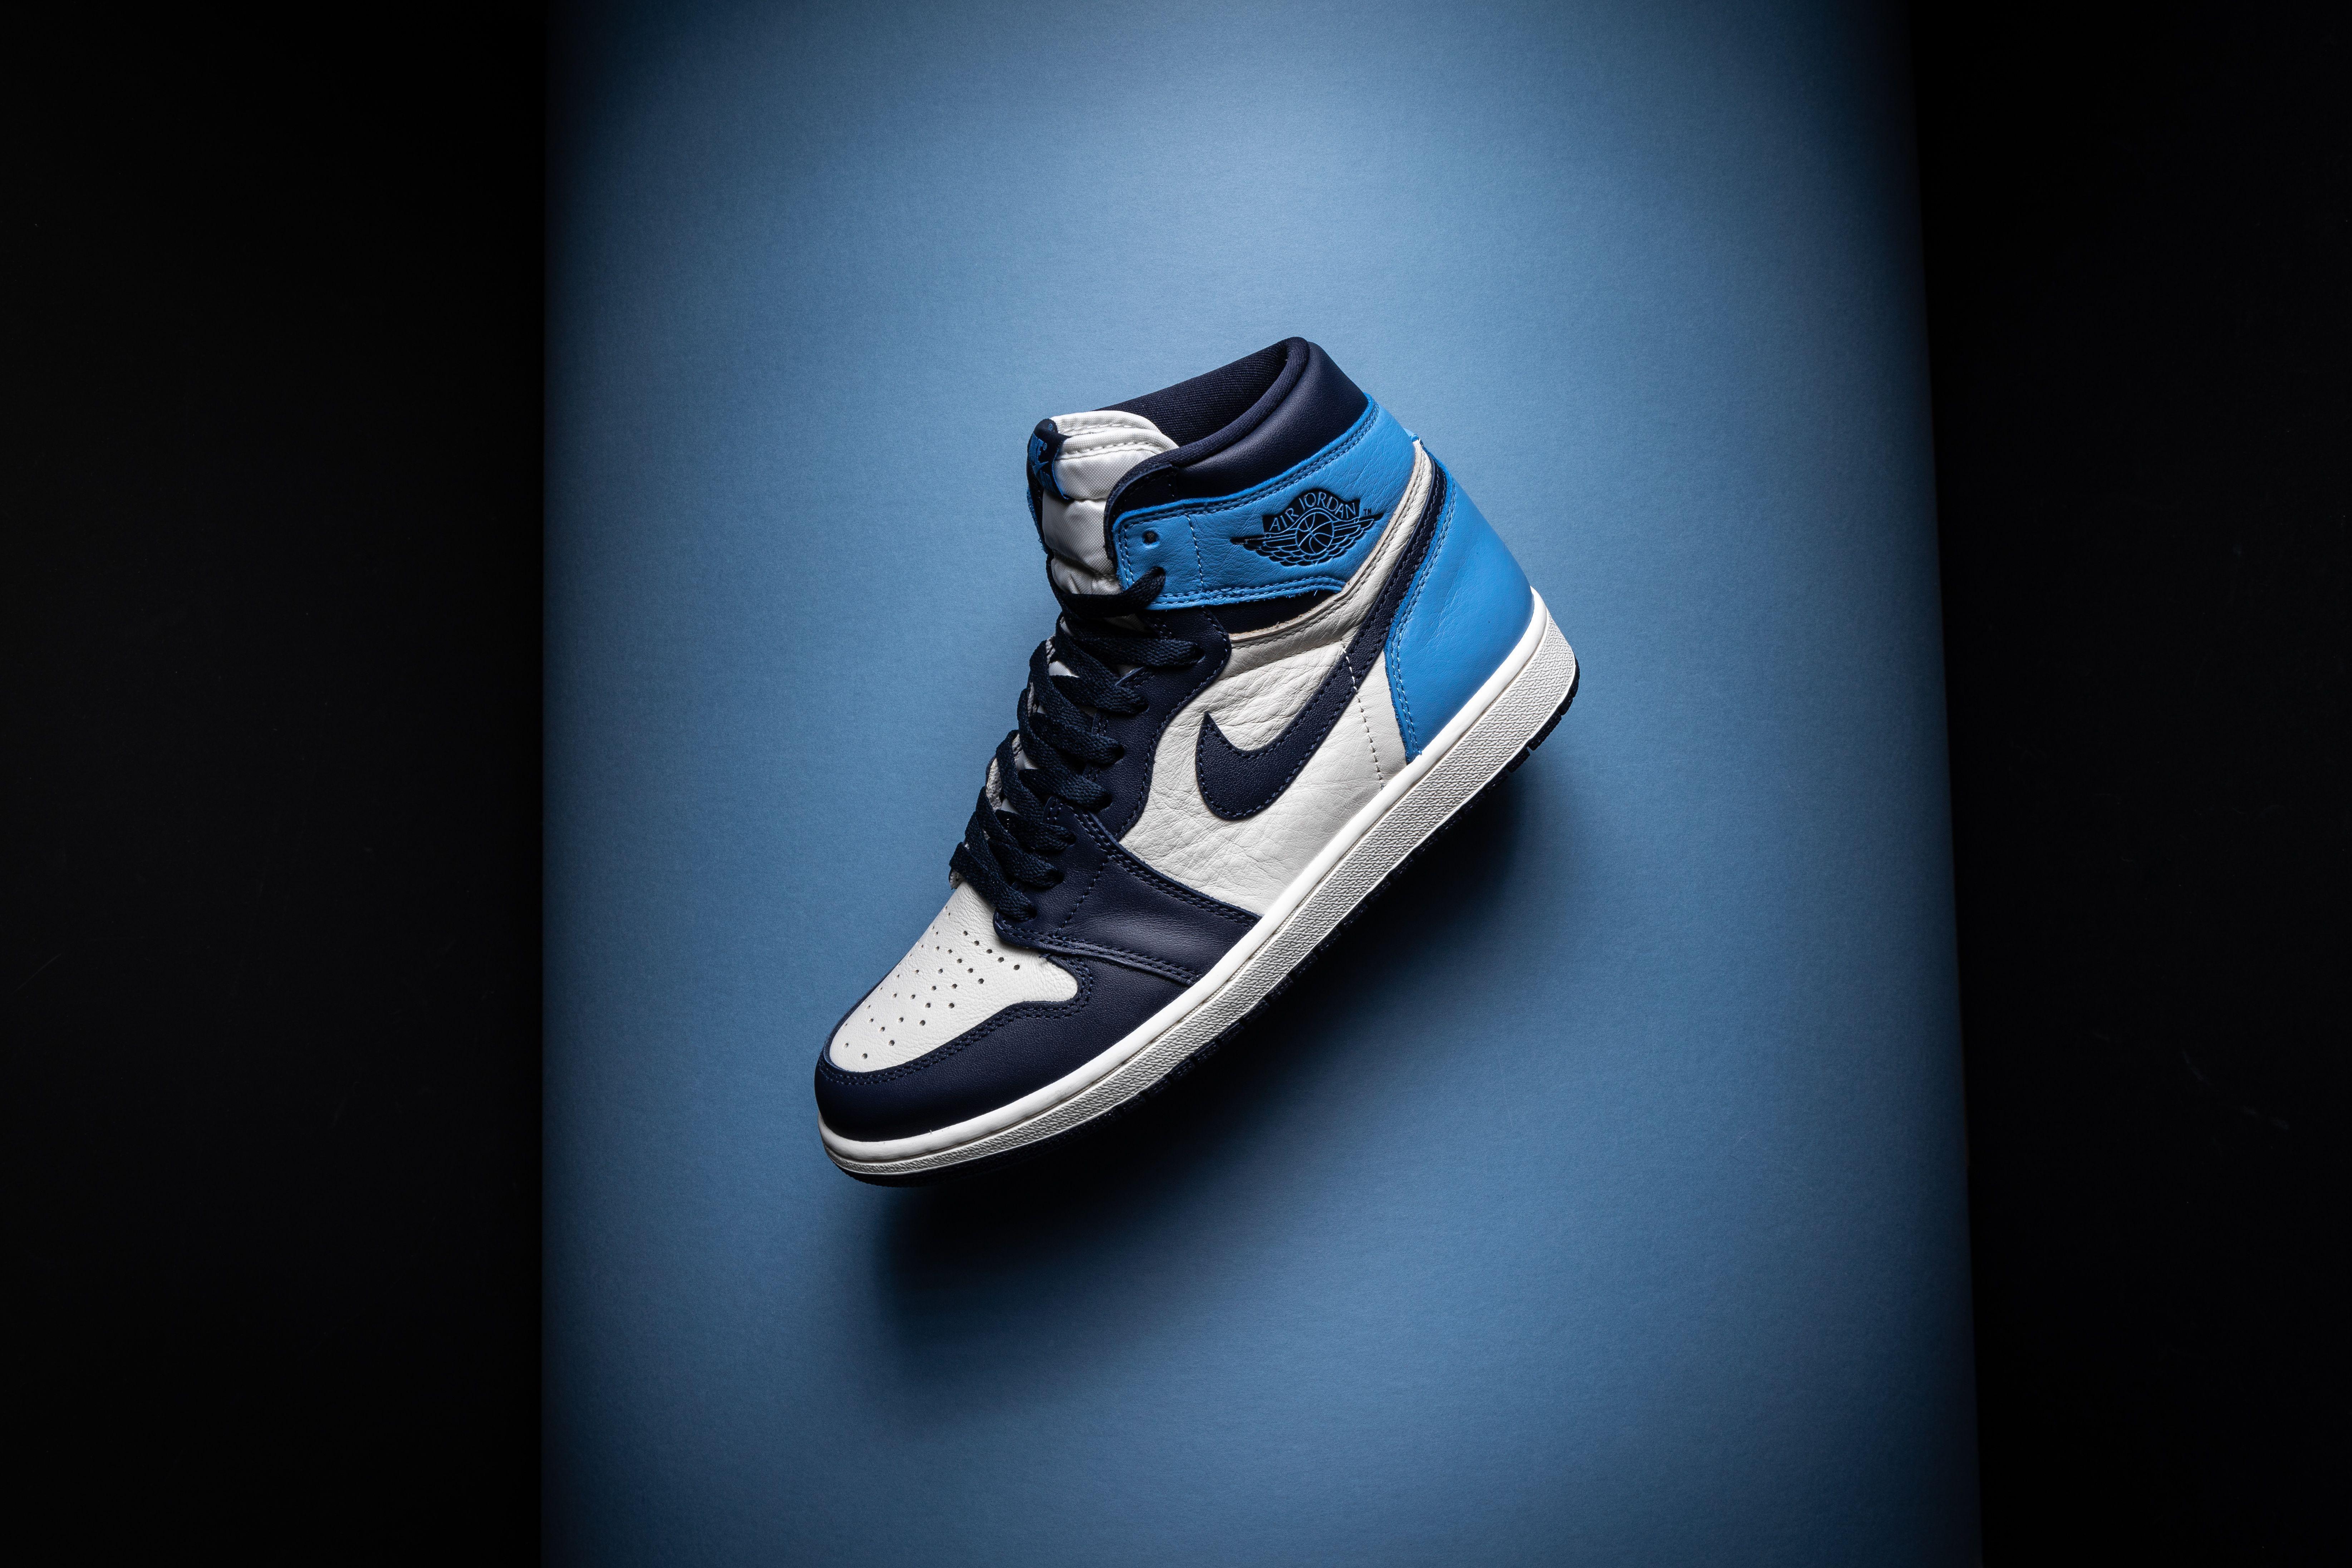 Blue Jordan Wallpapers Top Free Blue Jordan Backgrounds Wallpaperaccess